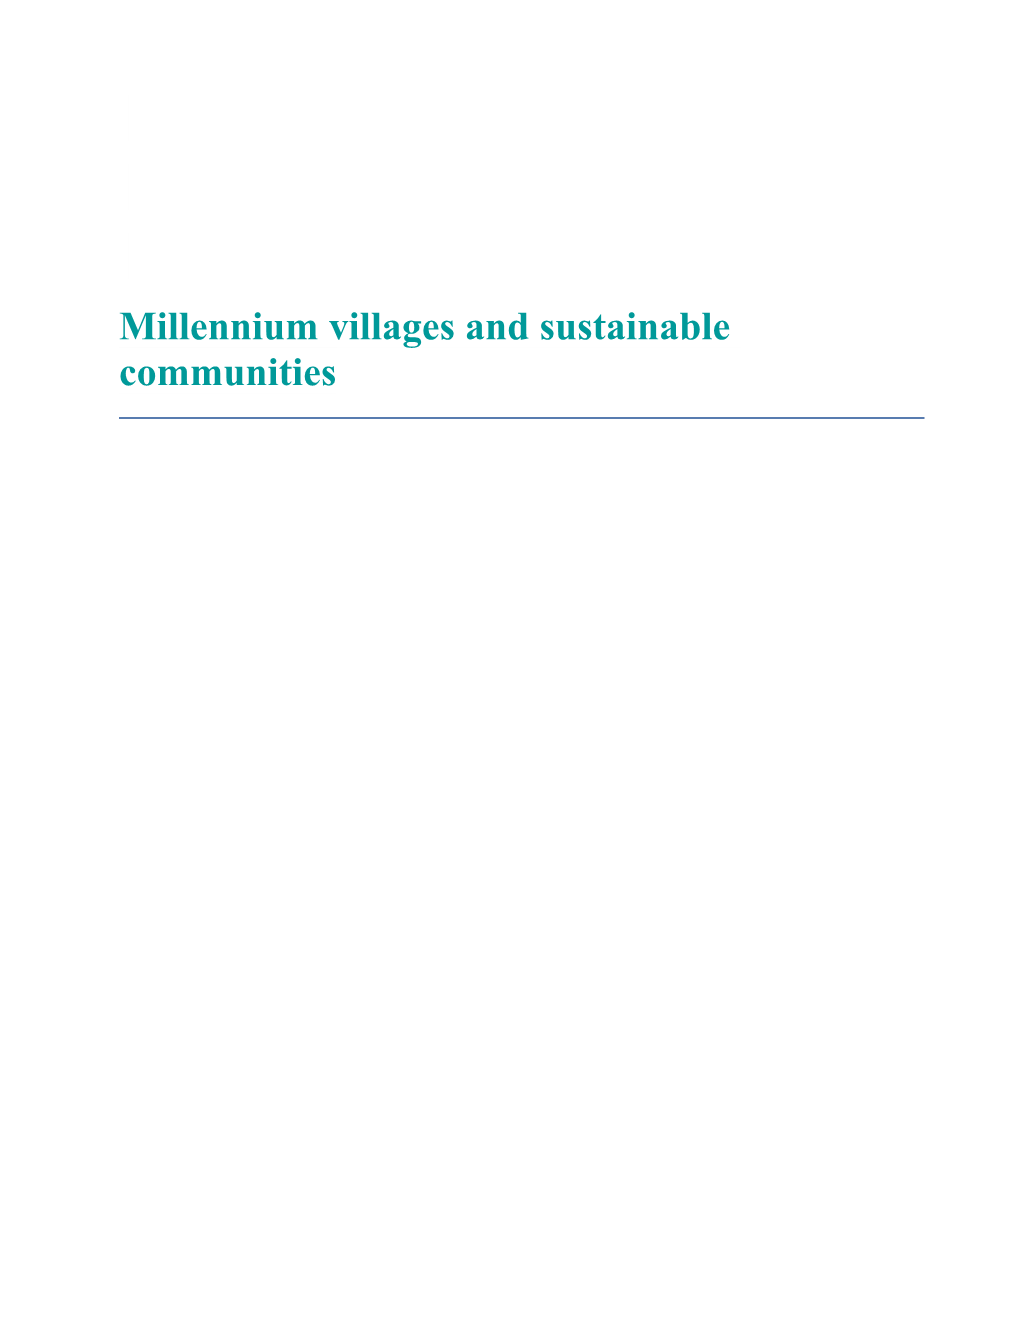 Millennium Villages and Sustainable Communities